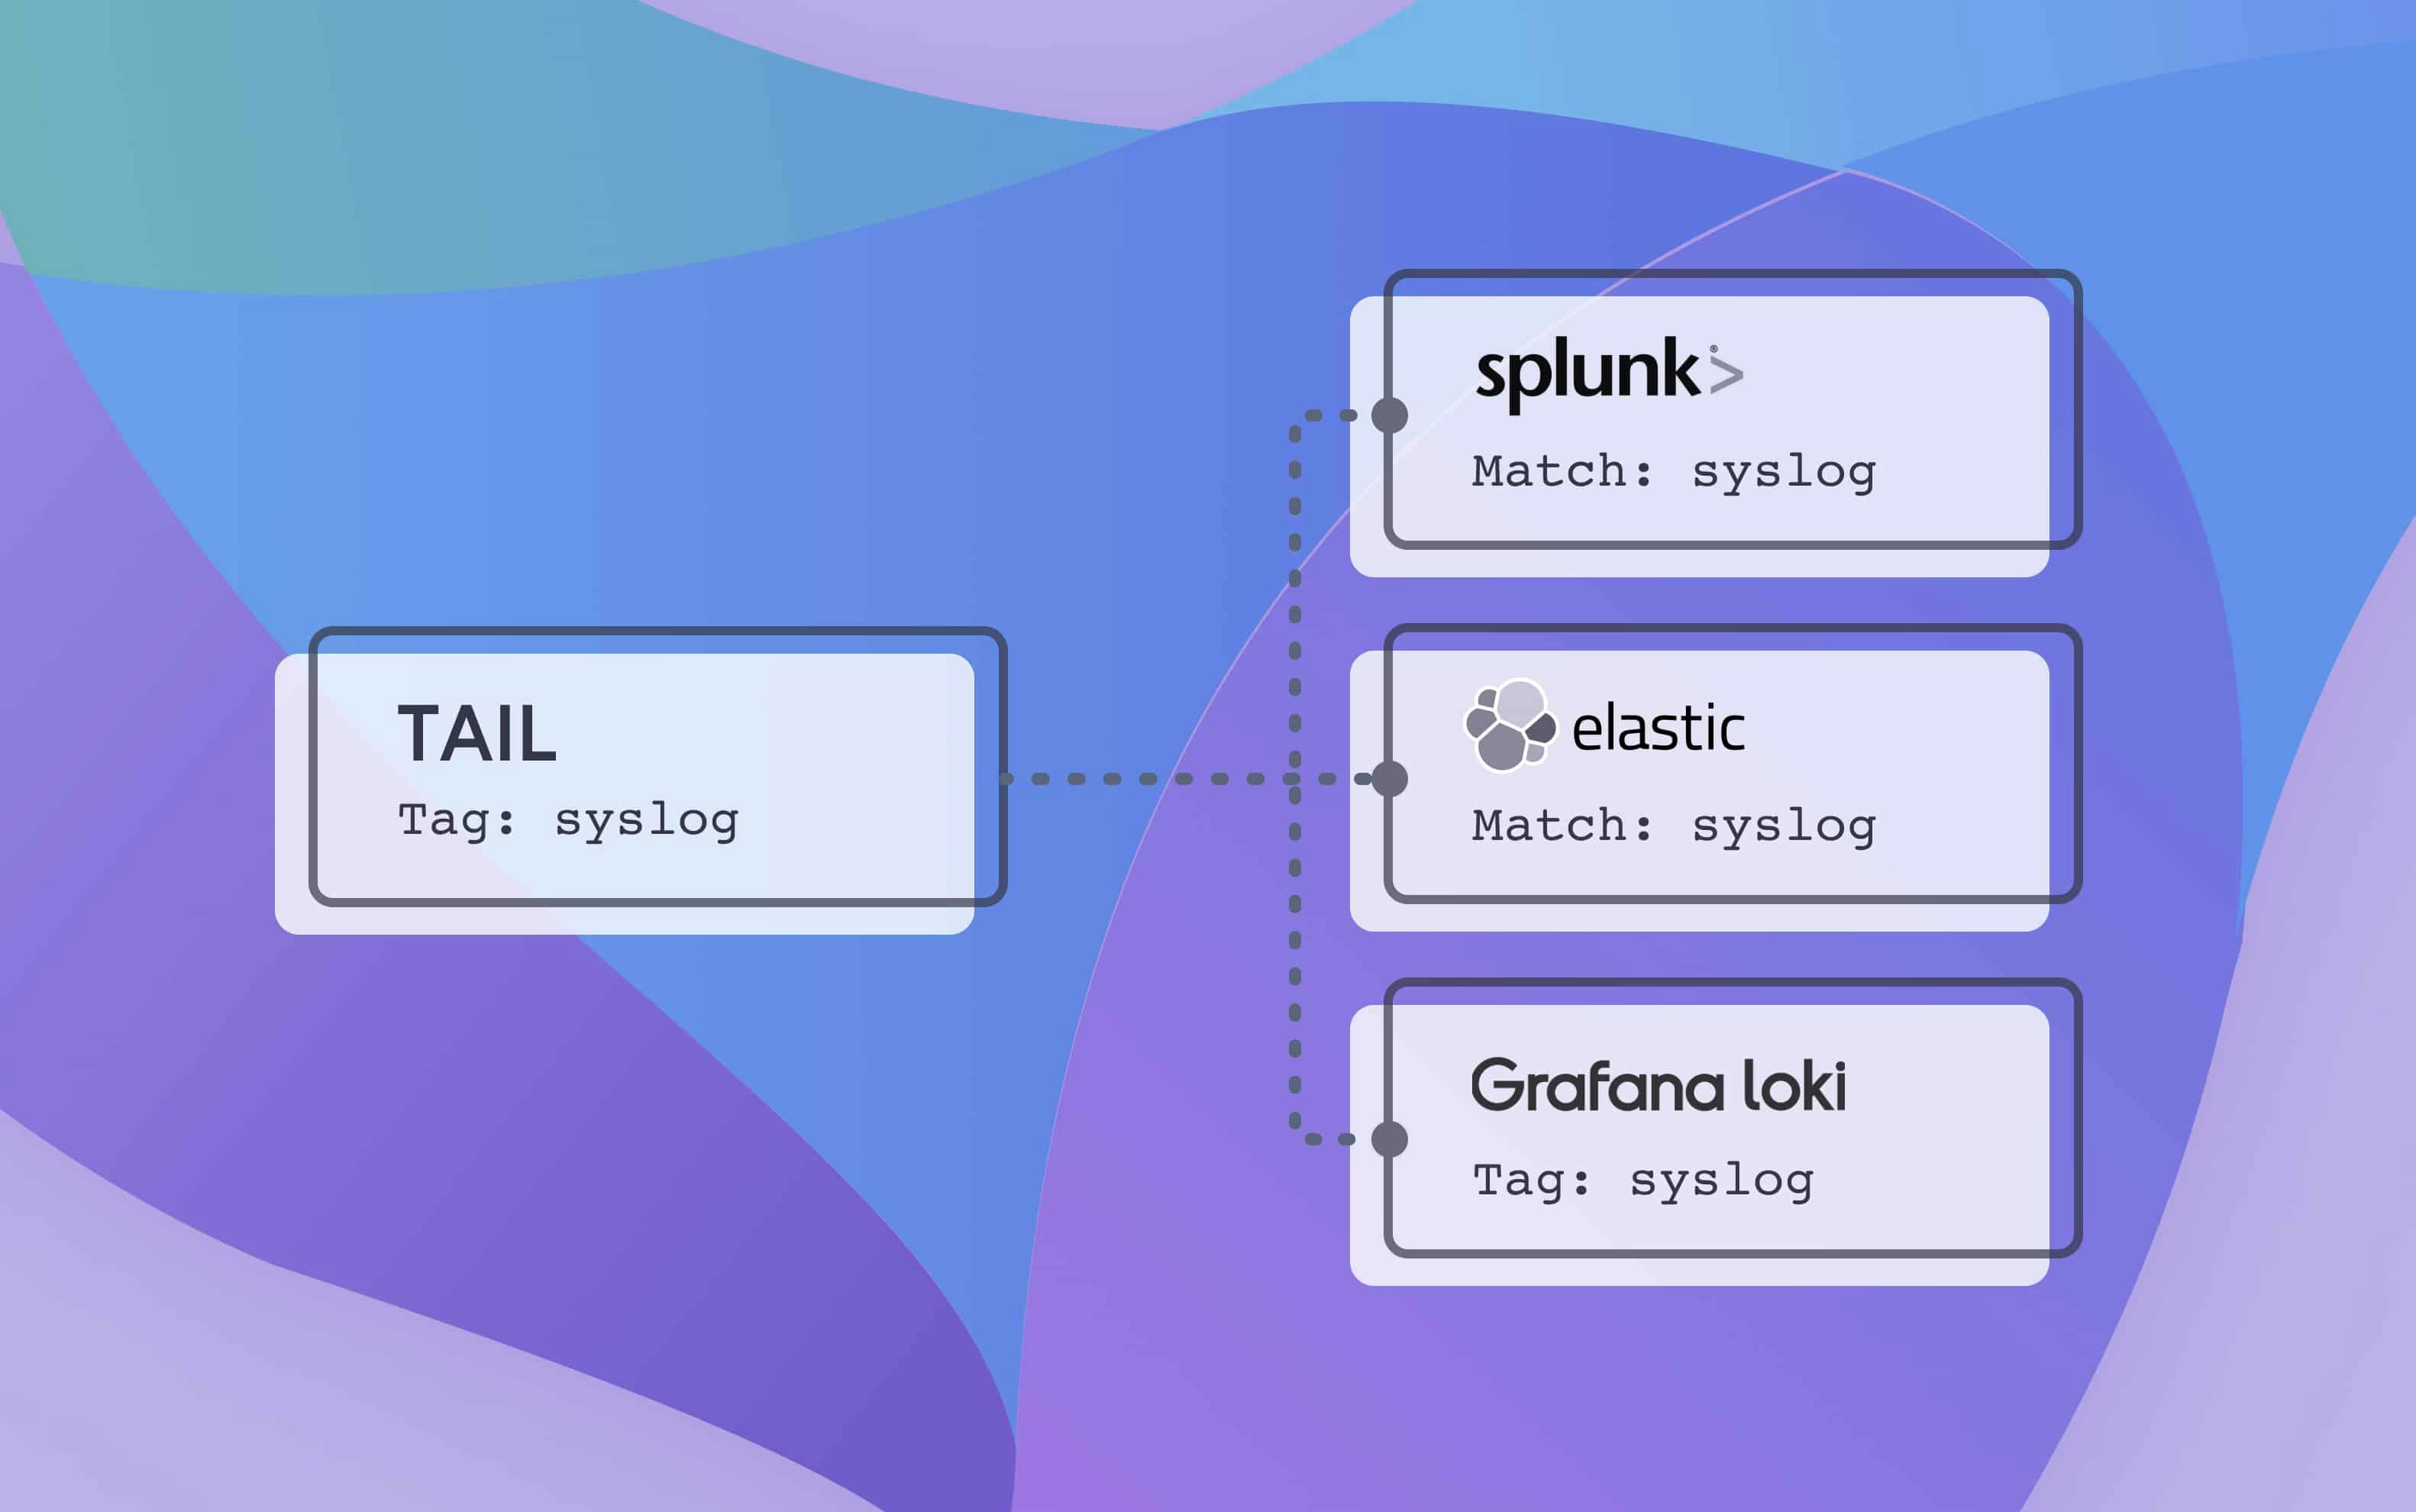 decorative flow diagram showing tail data being sent to Splunk, Elastic, and Grafana Loki